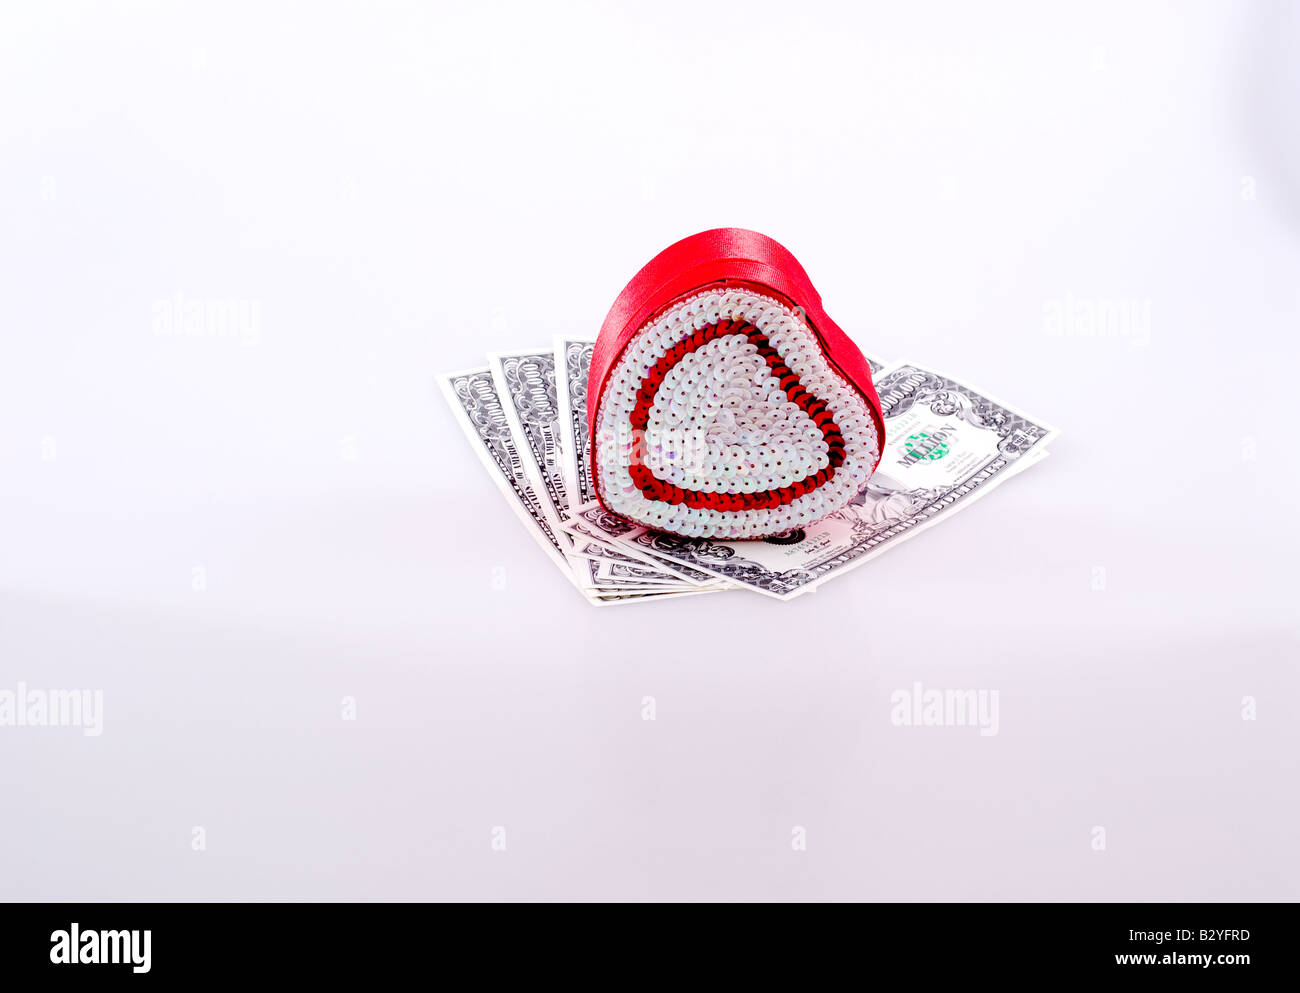 Small heart-shaped candy box atop fake million dollar bills Stock Photo